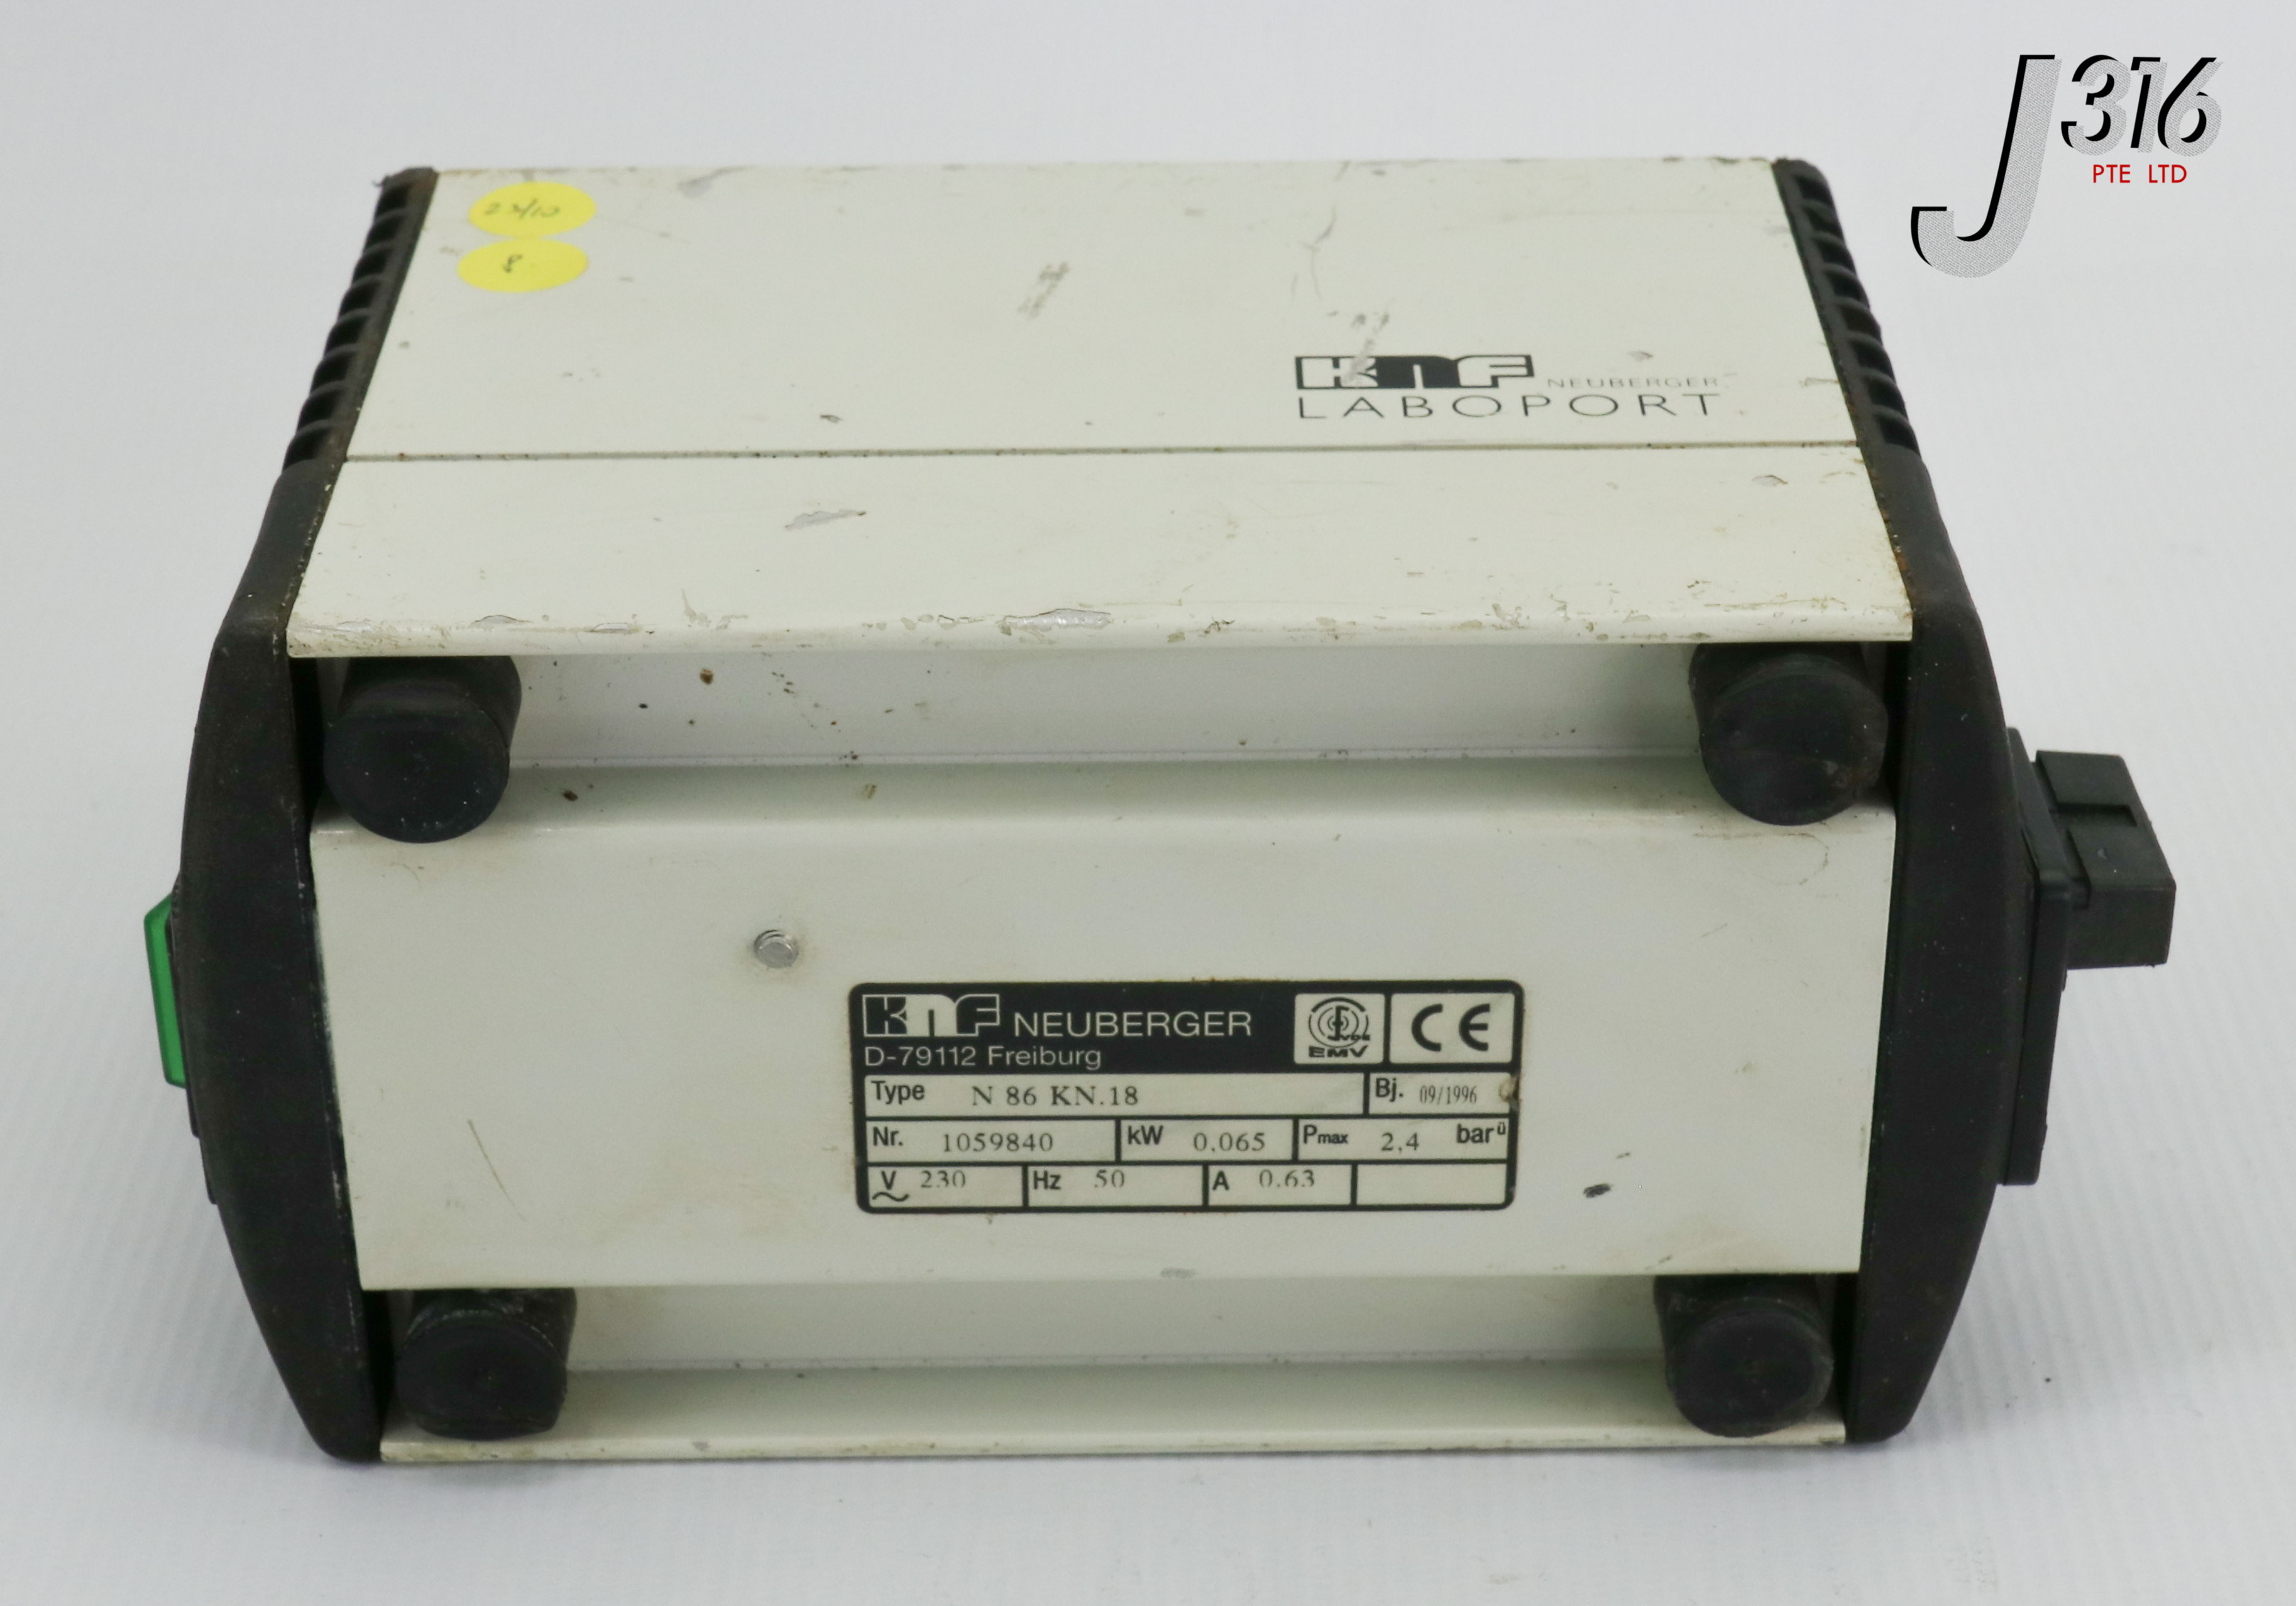 1724 KNF Laboport Vacuum Pump N 86 Kn.18 N86kn.18 for sale online 